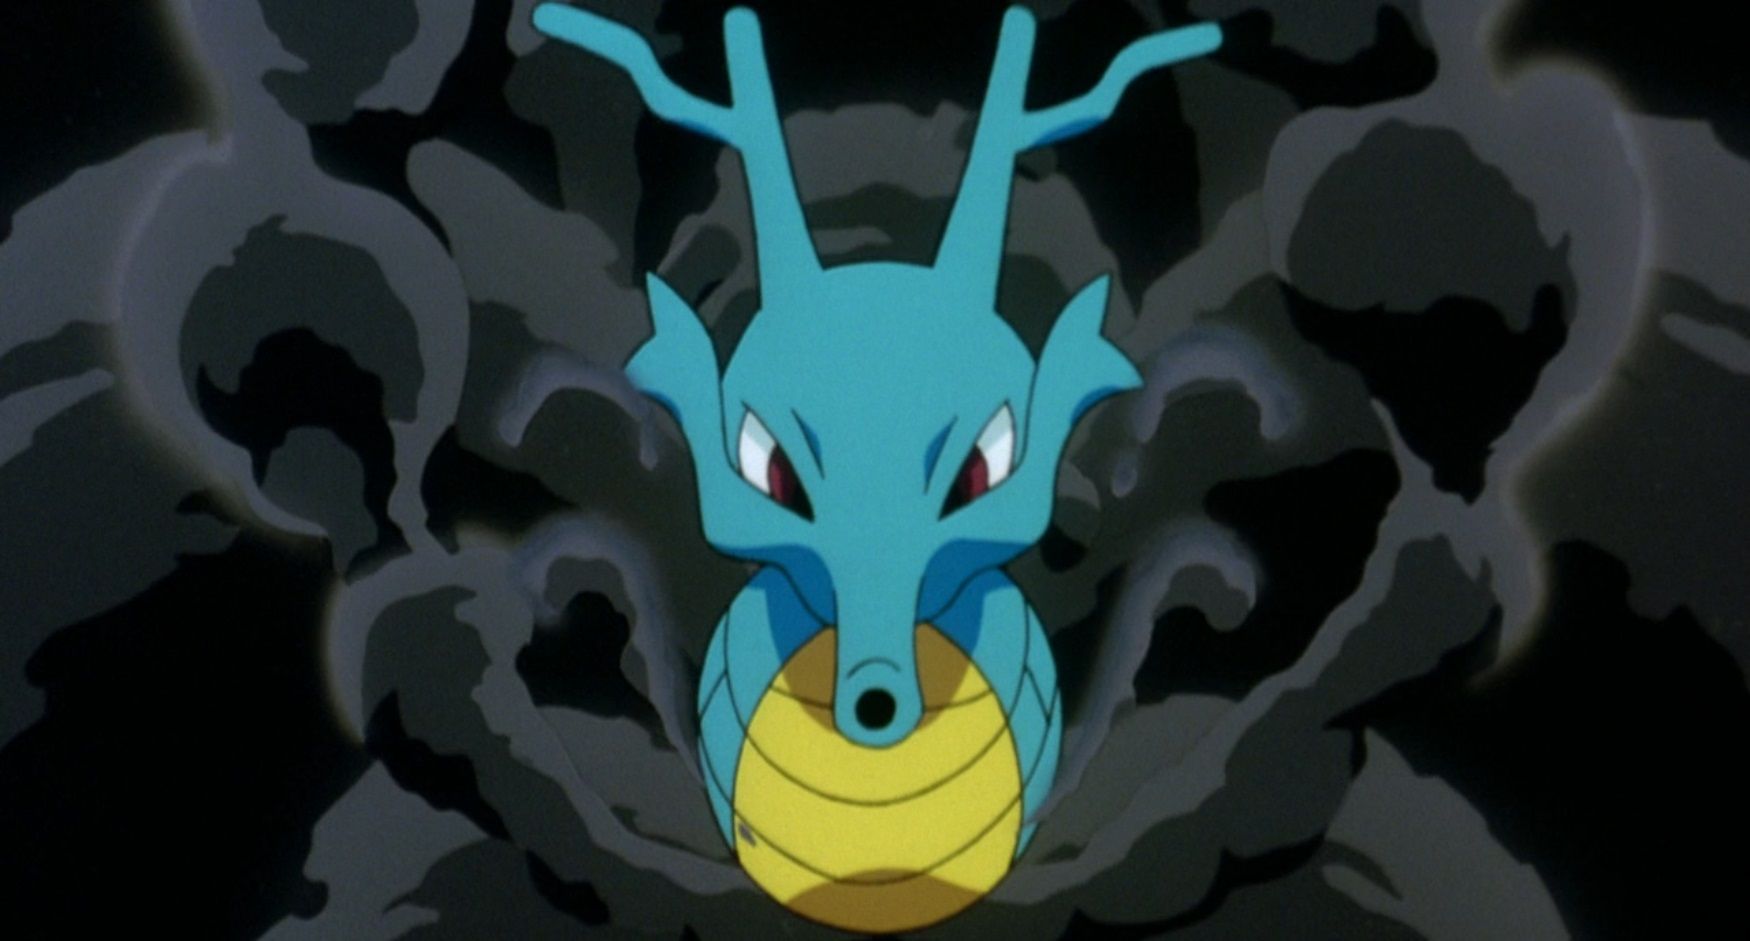 The 10 Most Powerful DragonTypes In Pokémon Go Ranked